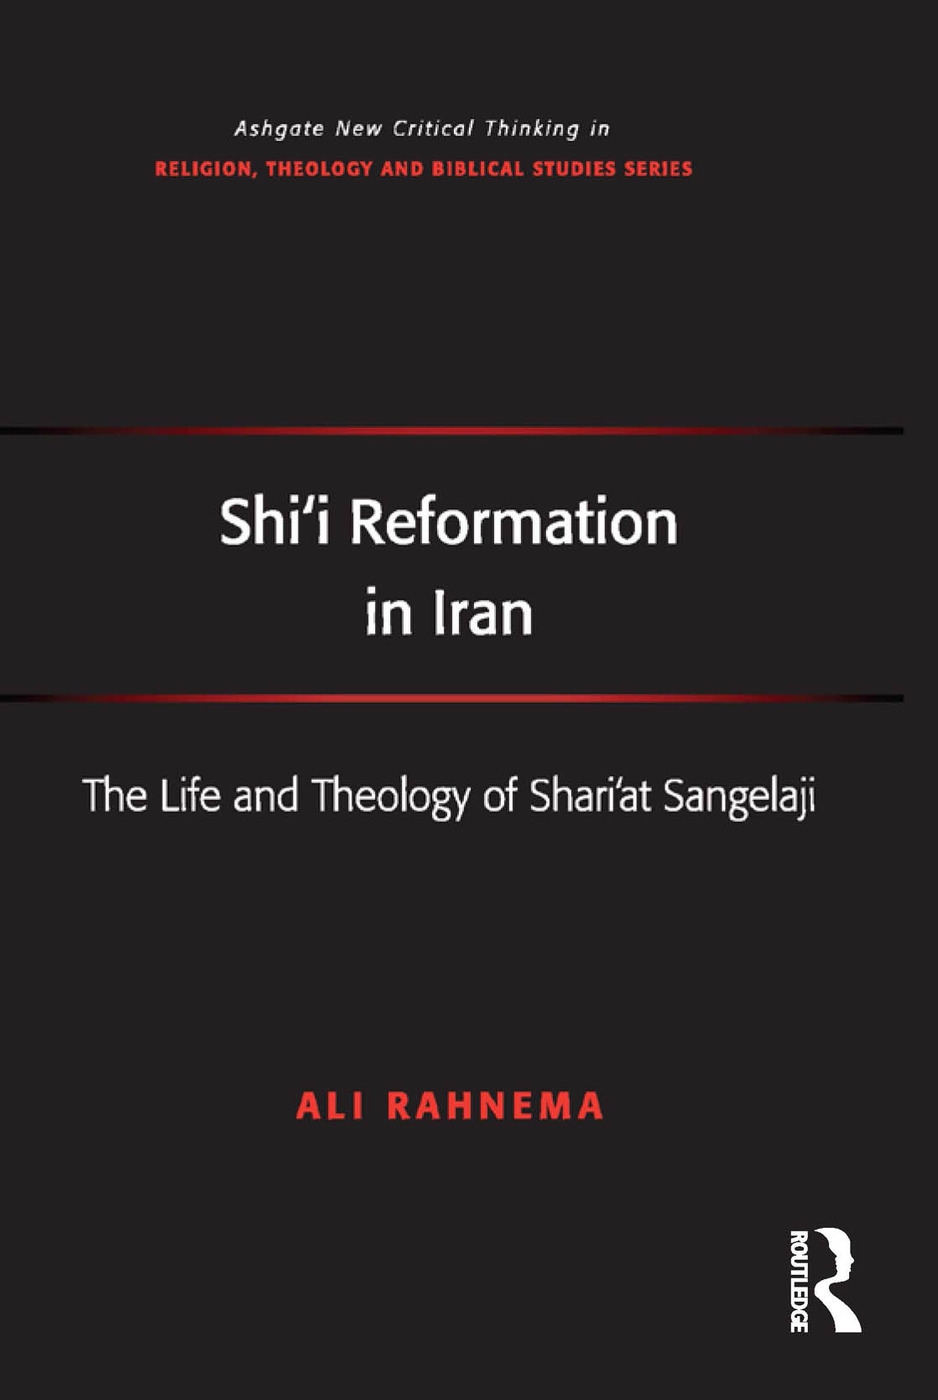 Shi’i Reformation in Iran: The Life and Theology of Shari’at Sangelaji